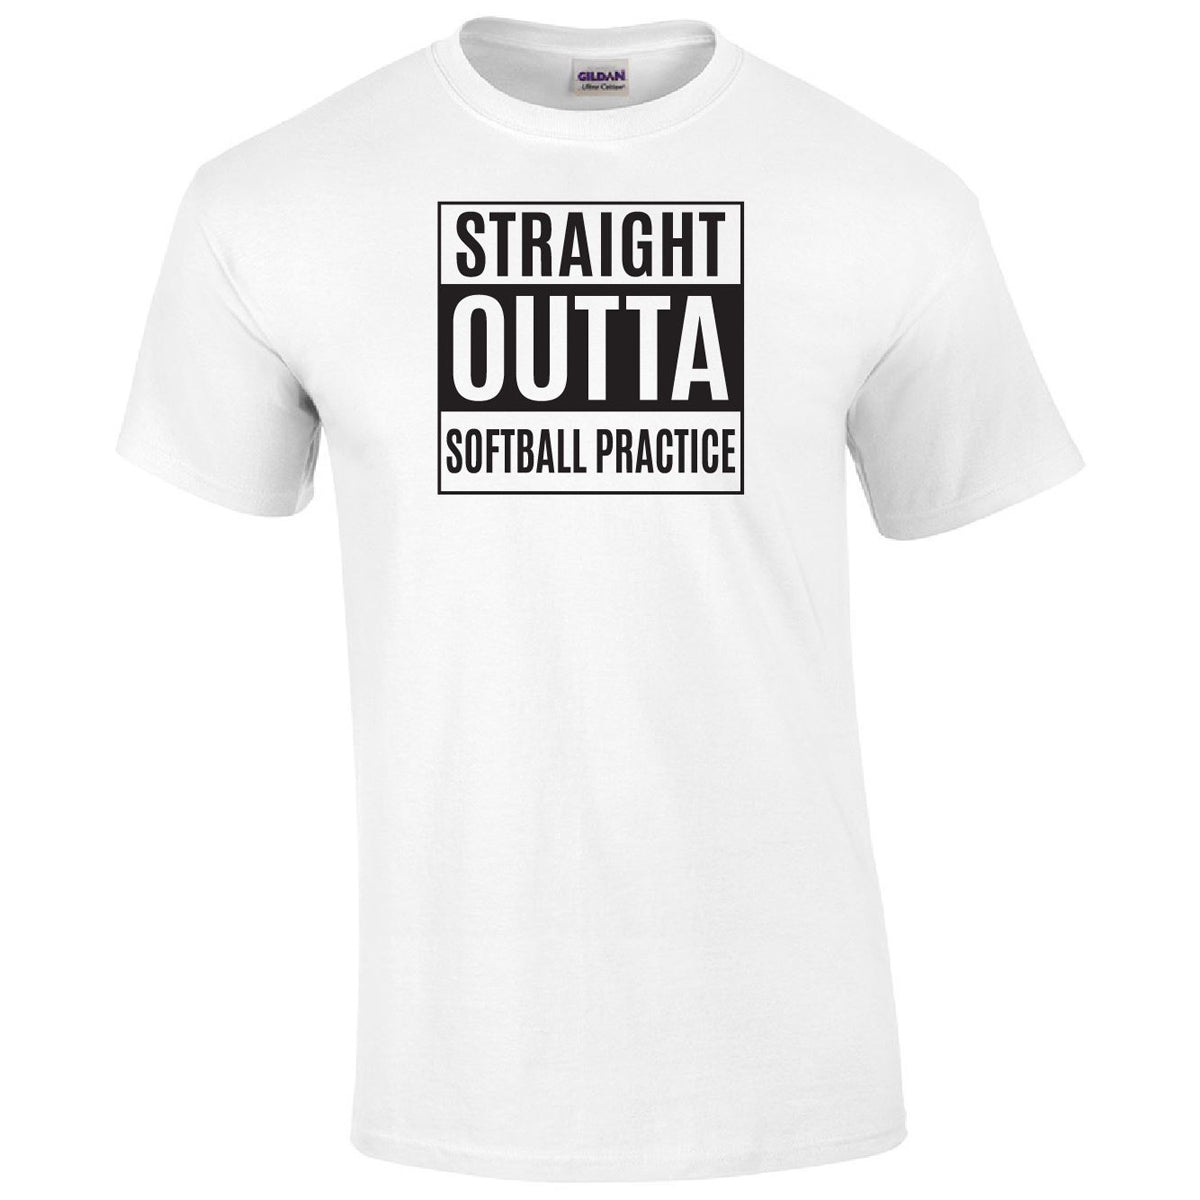 Straight Outta Softball Practice Printed Tee Humorous Shirt 411 Youth Medium White 